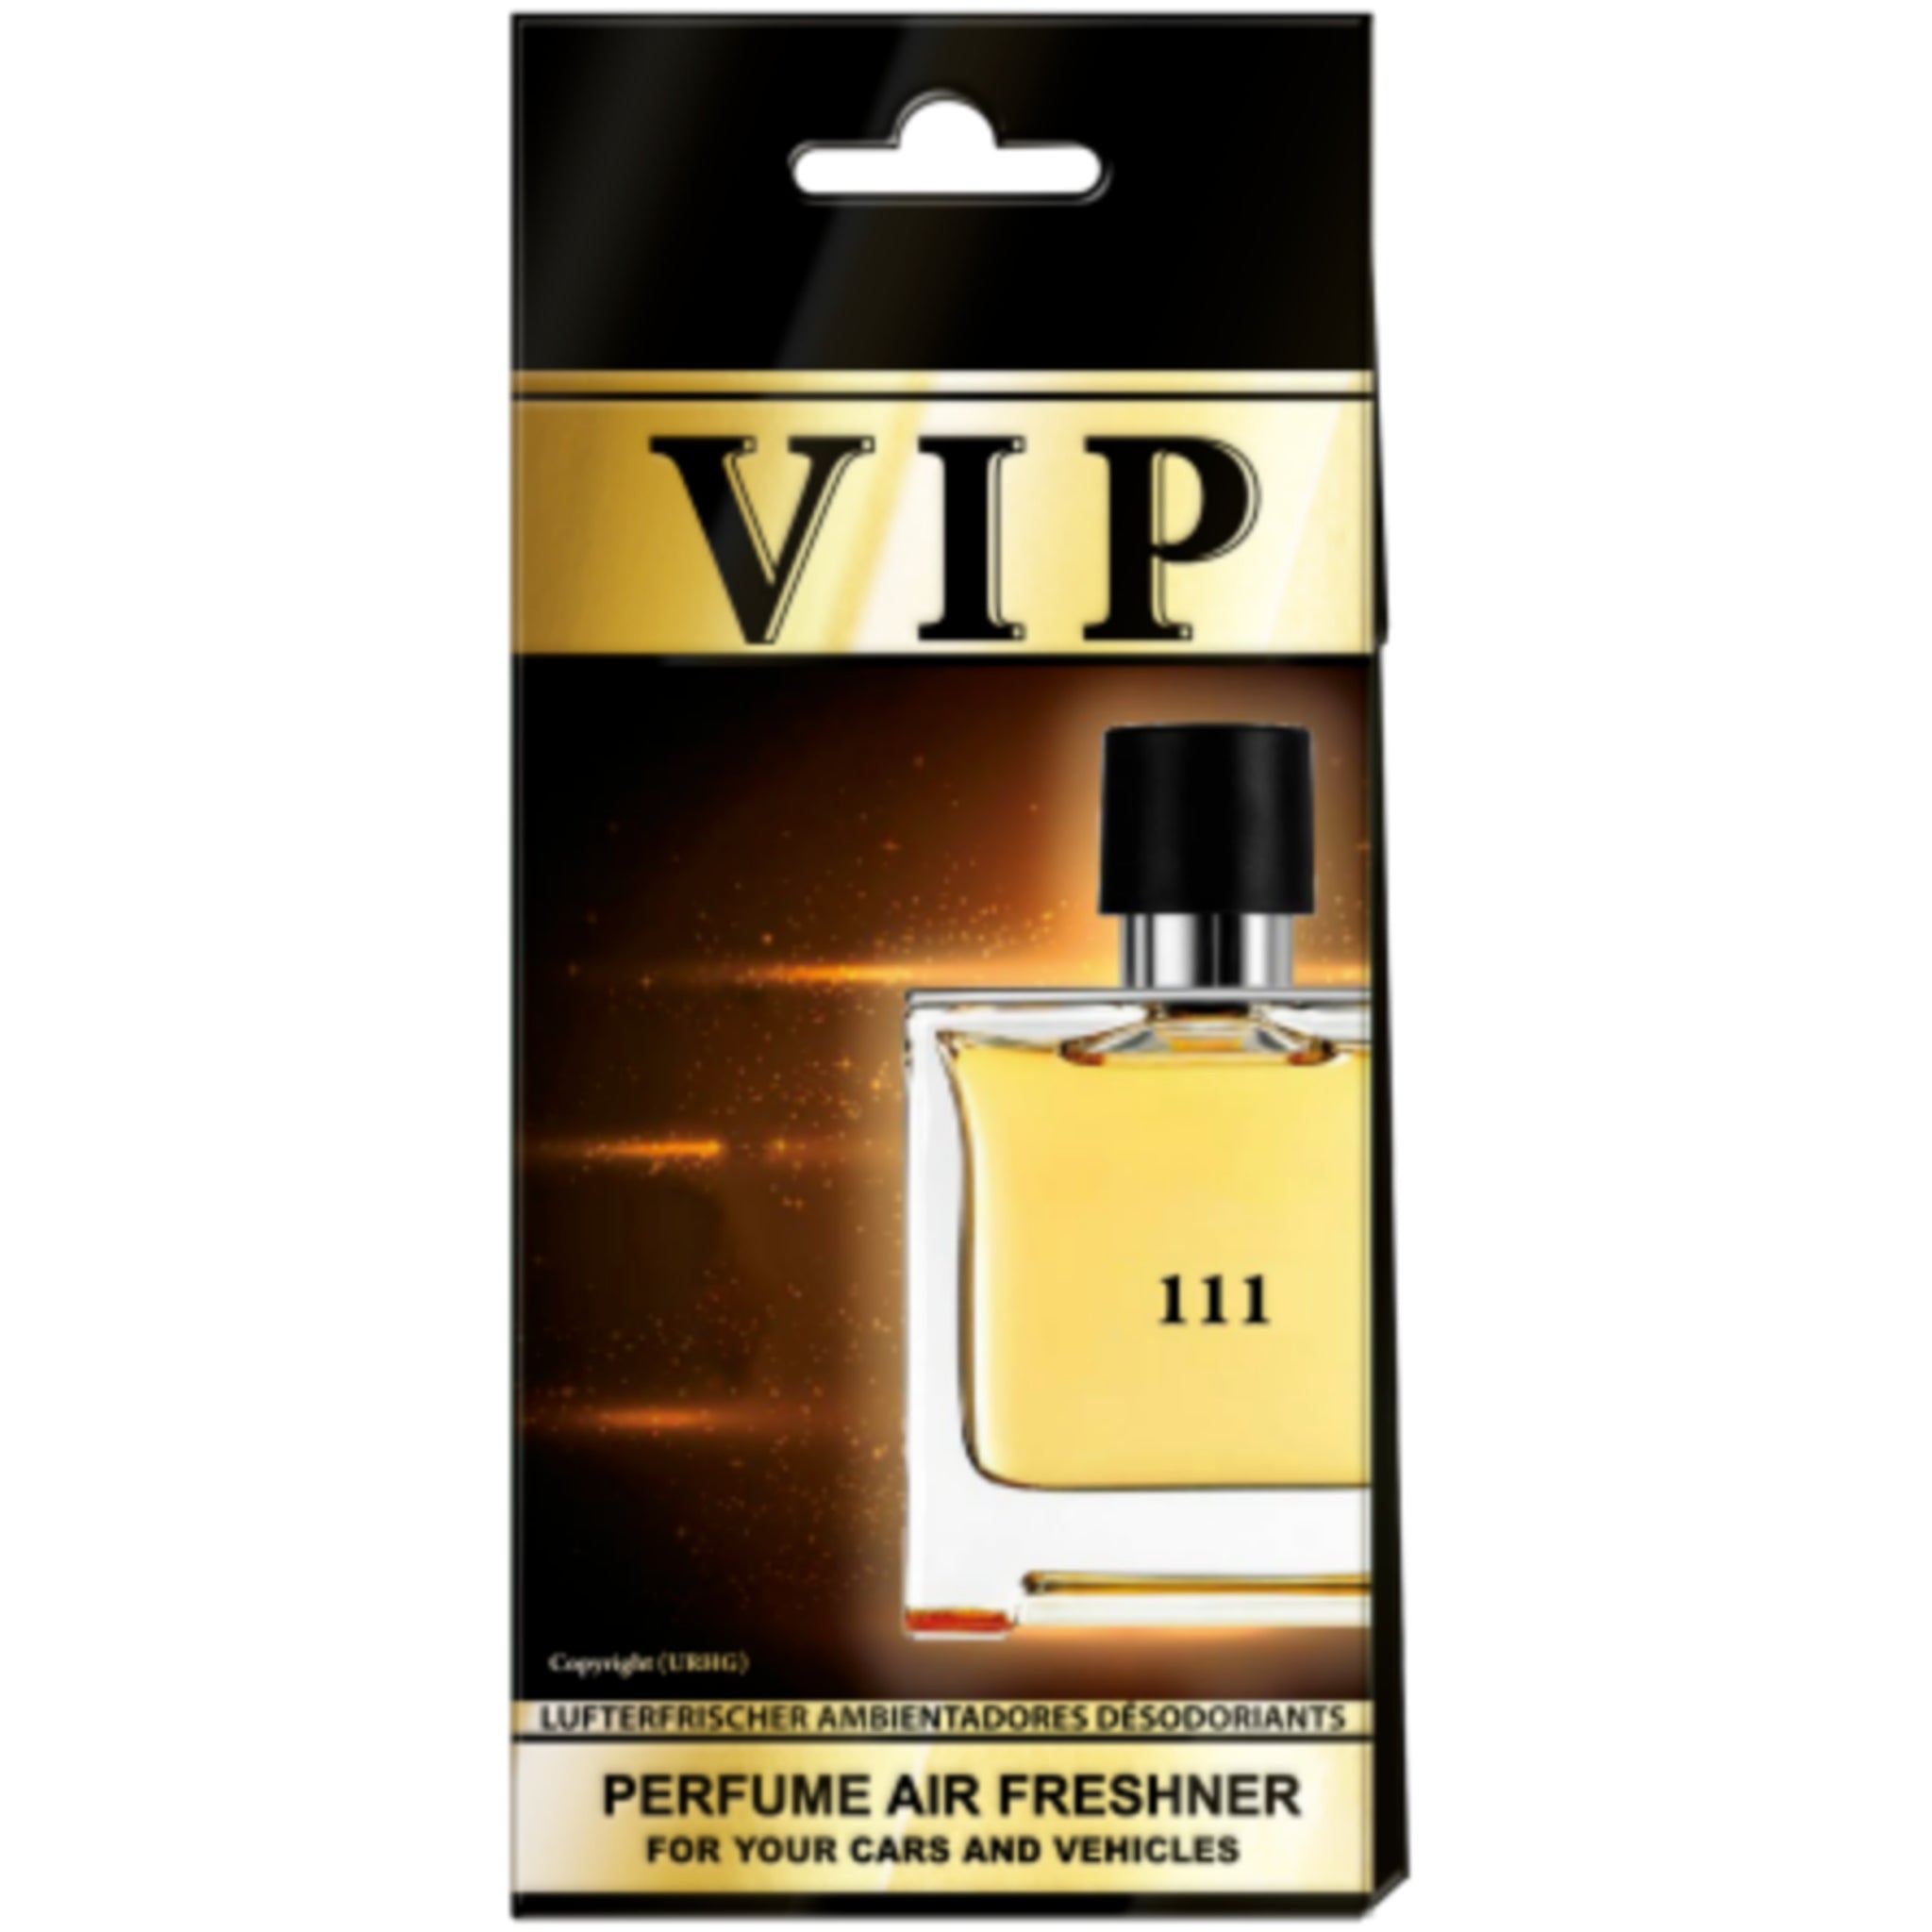 Car fragrance VIP 111